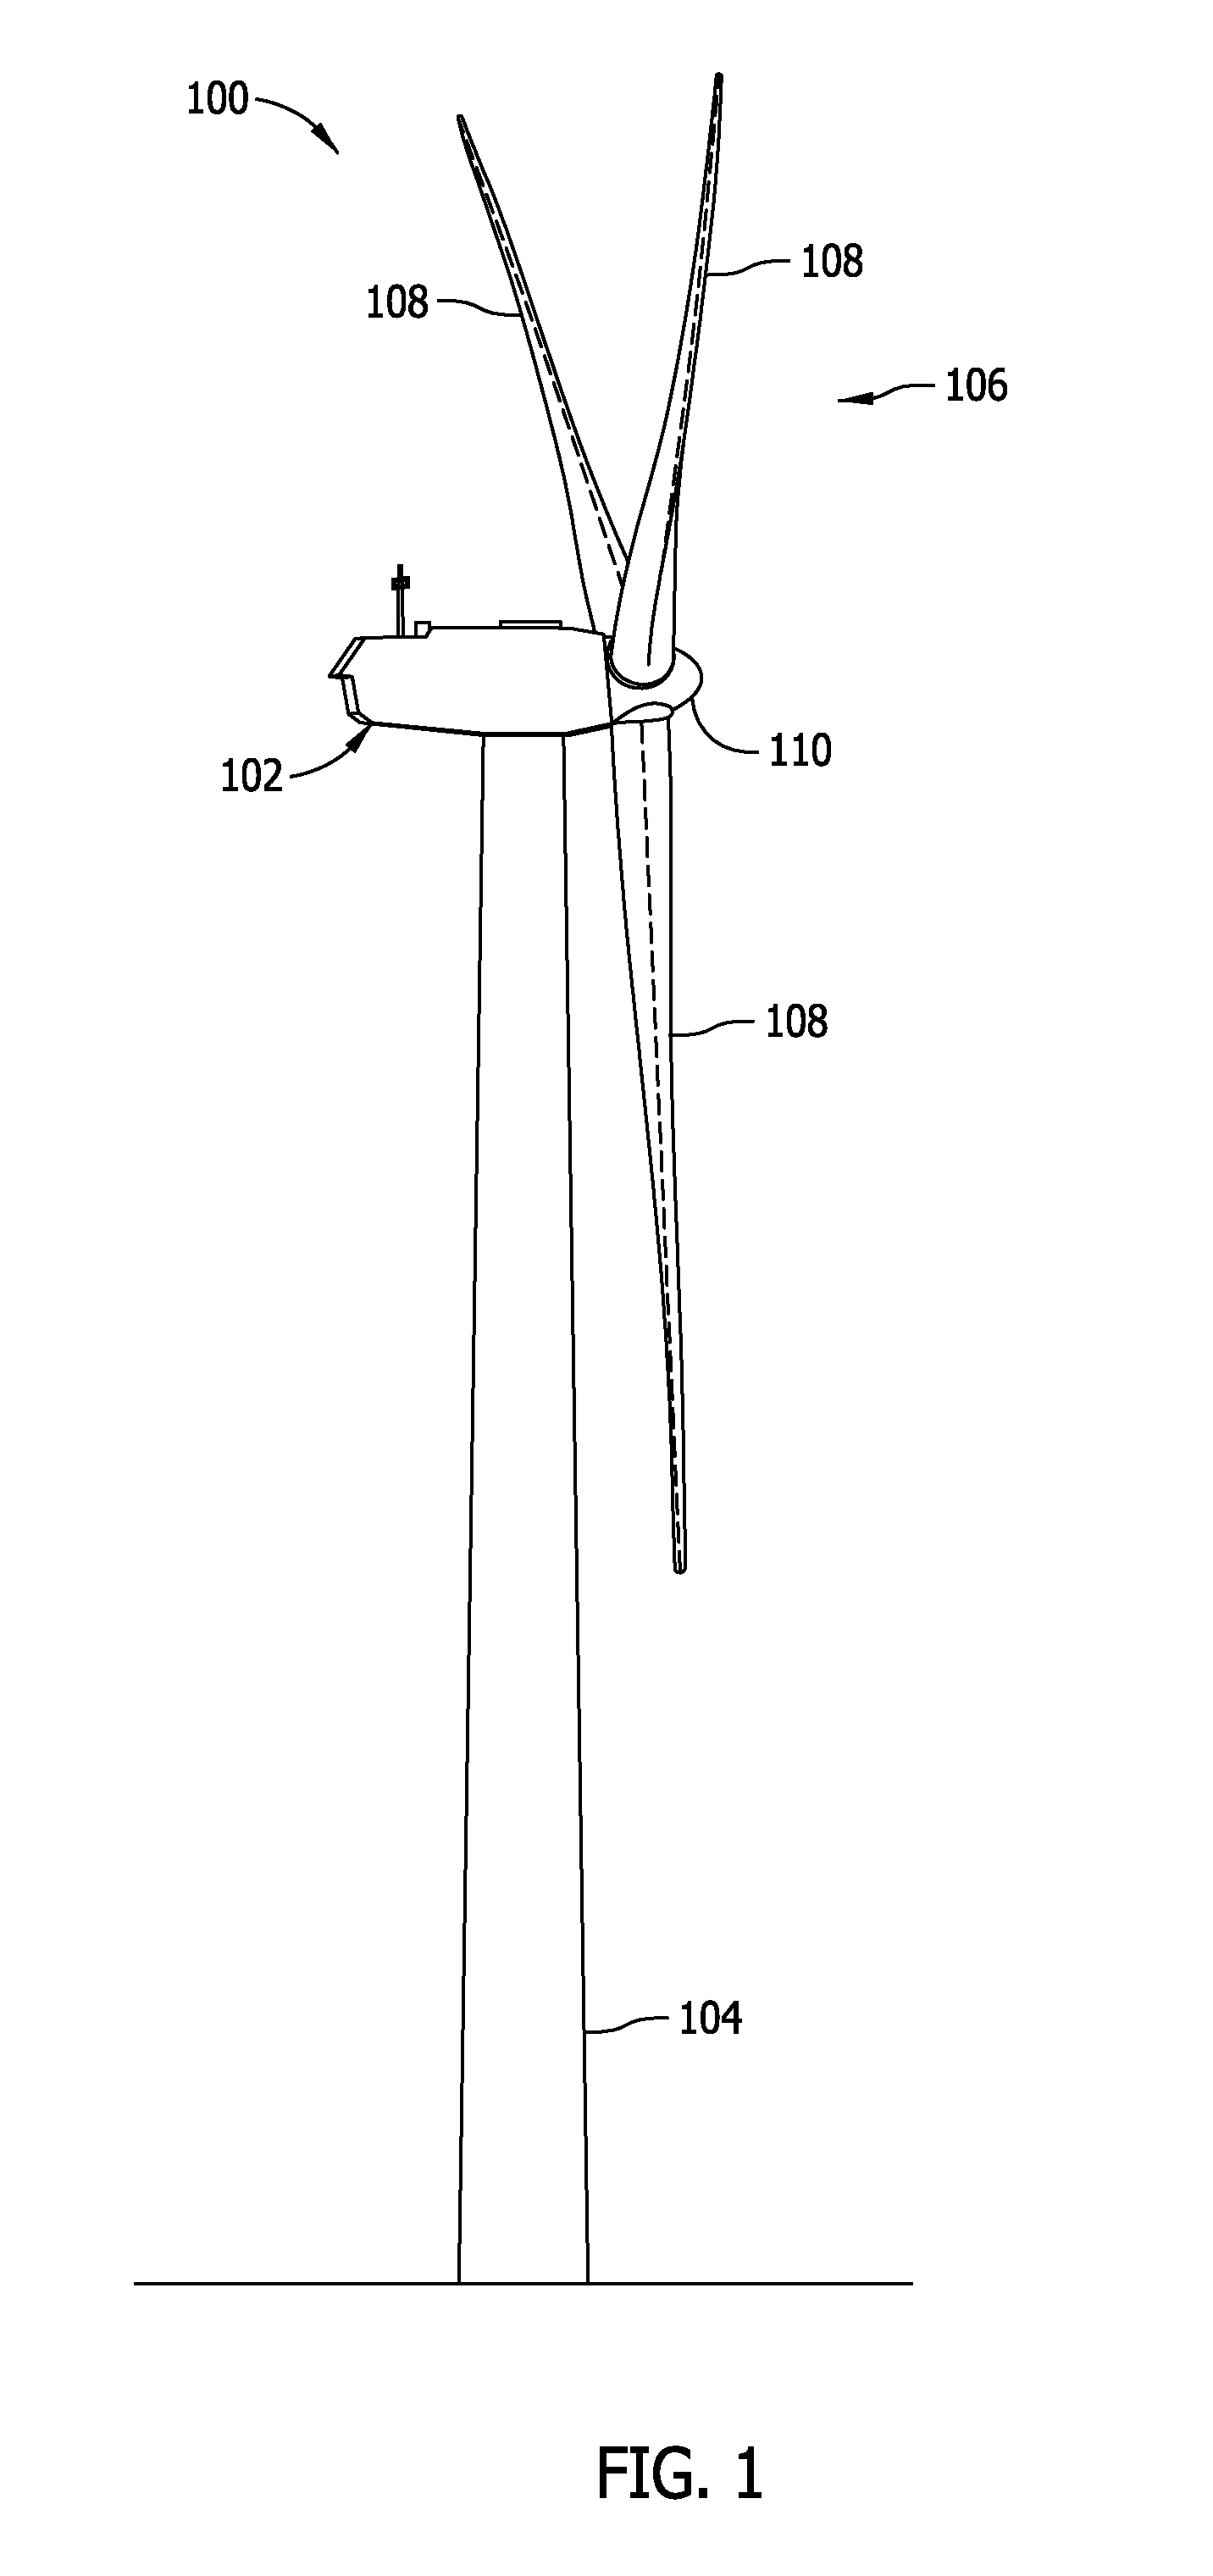 Three-level phase leg for a power converter